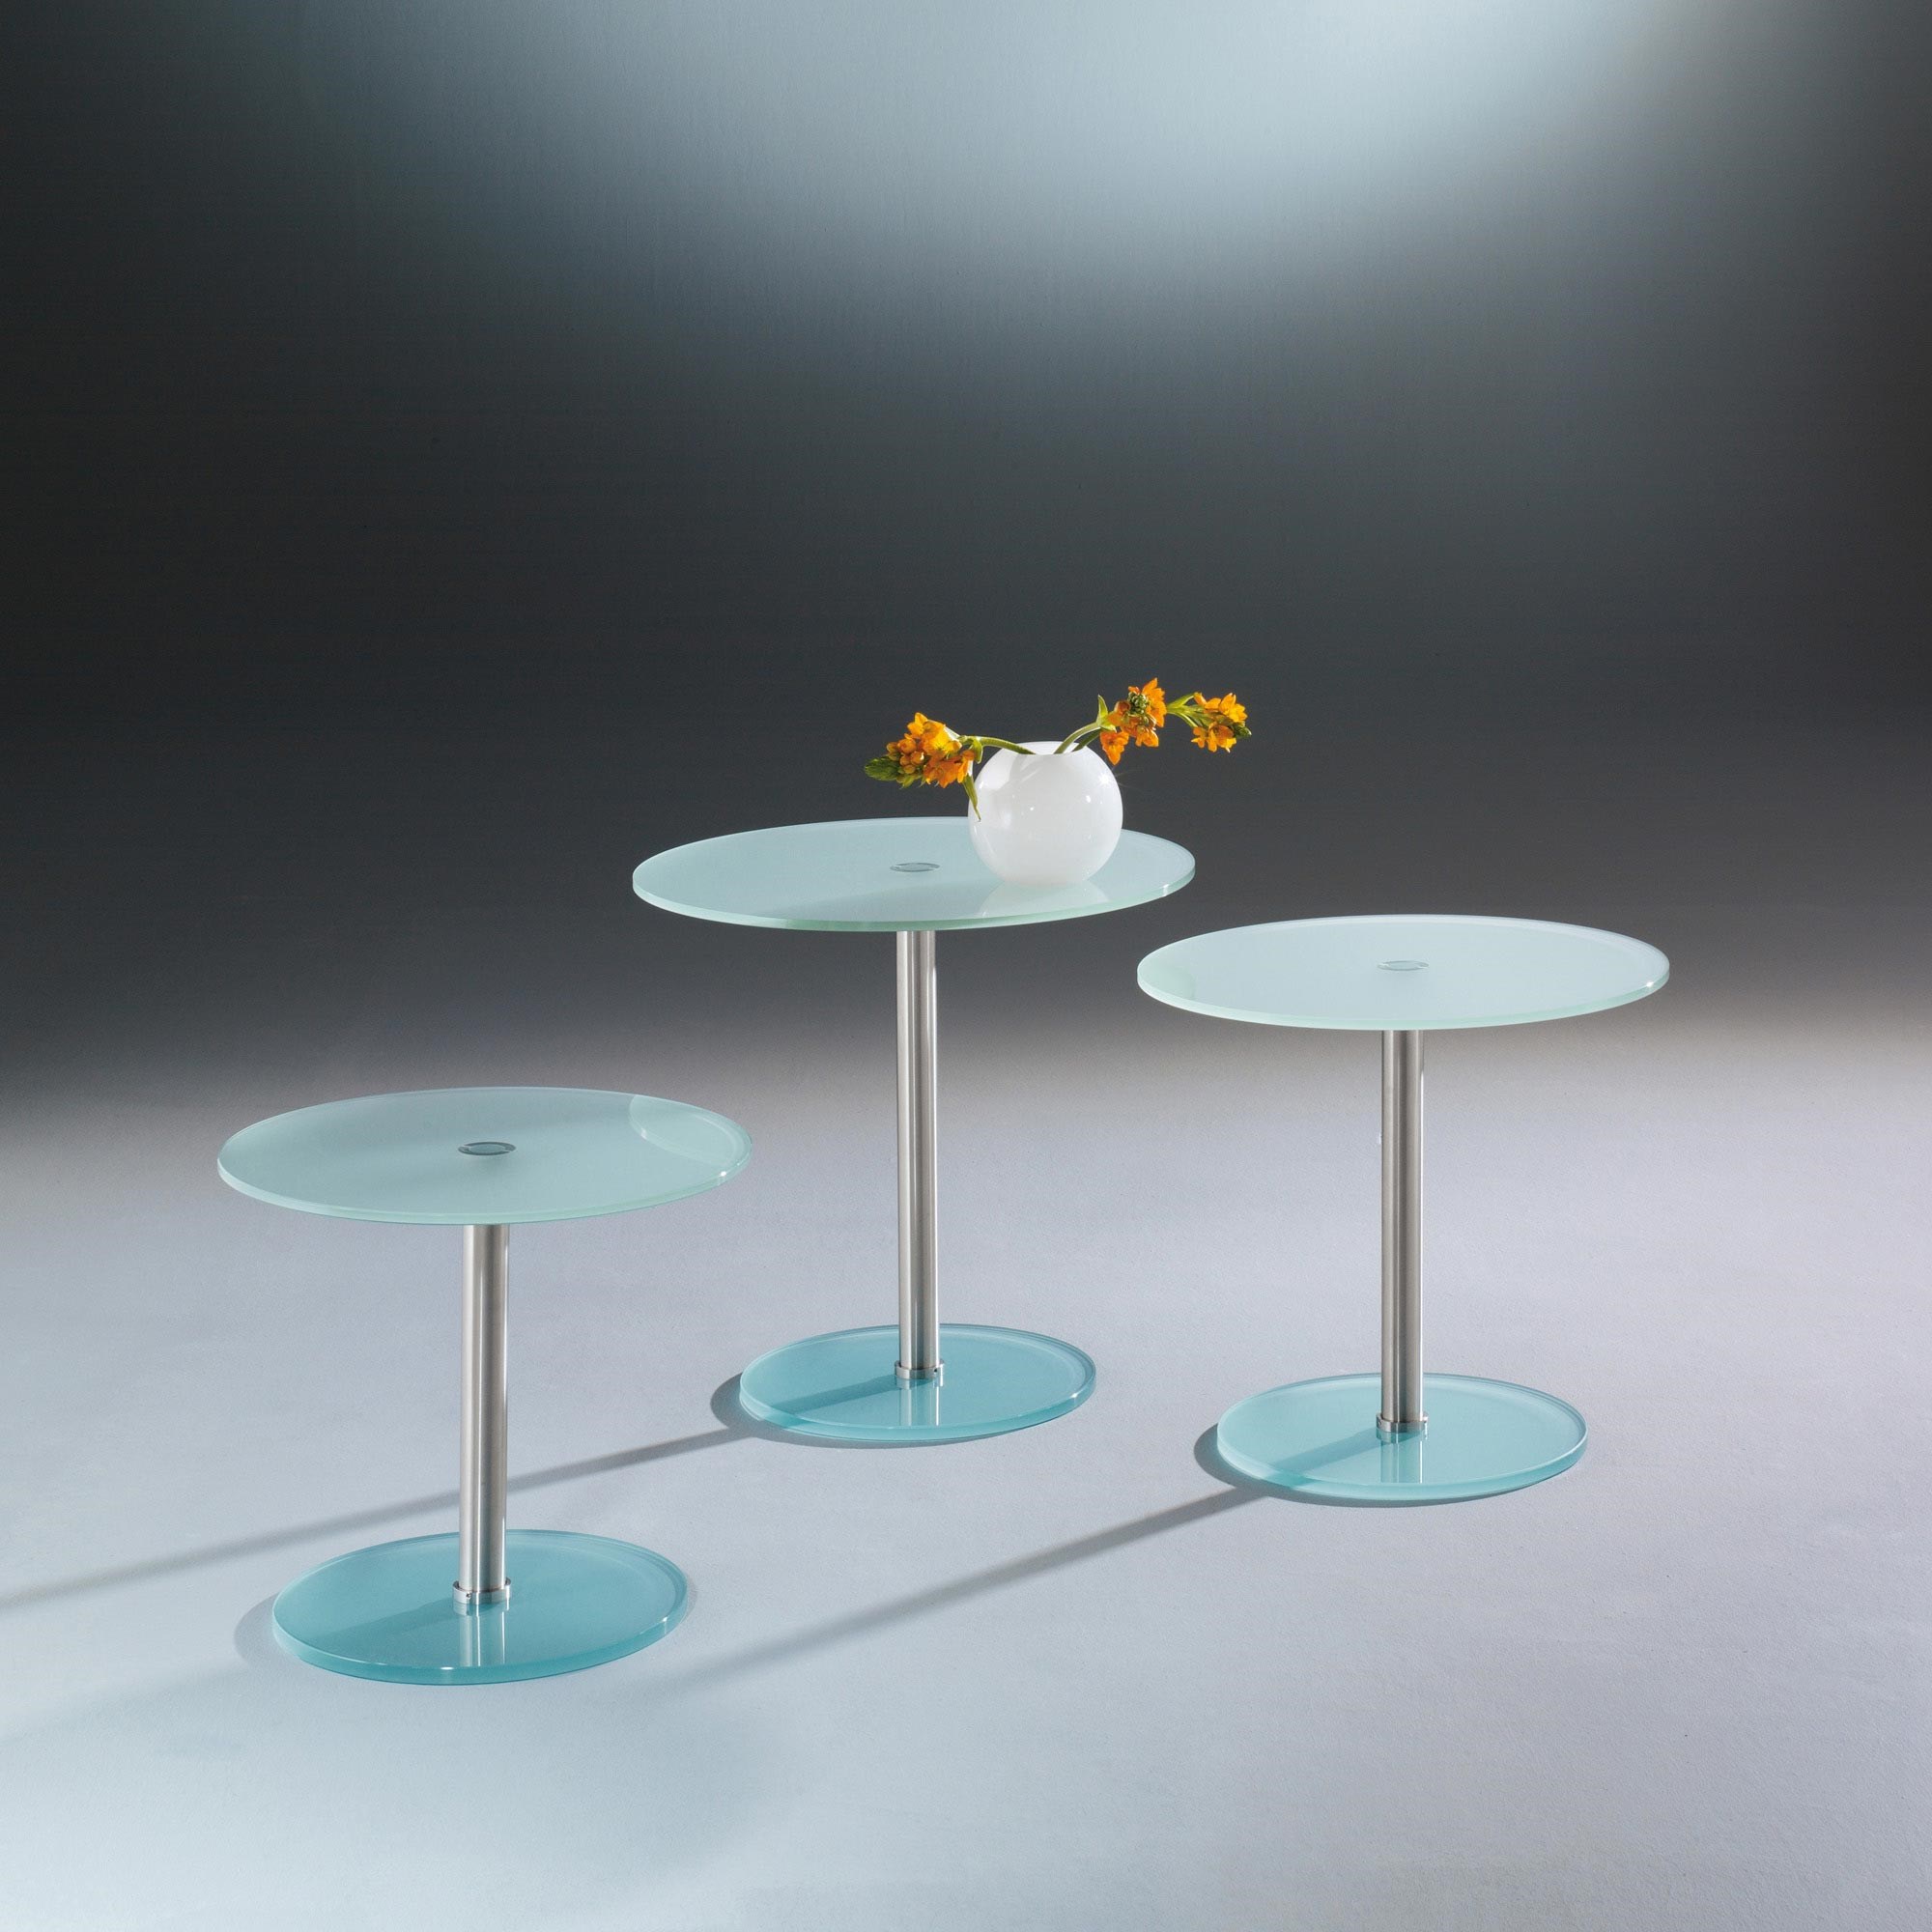 Glass side table RONDO by DREIECK DESIGN: R4540 - R5540 - R5040 - FLOATGLASS satinated